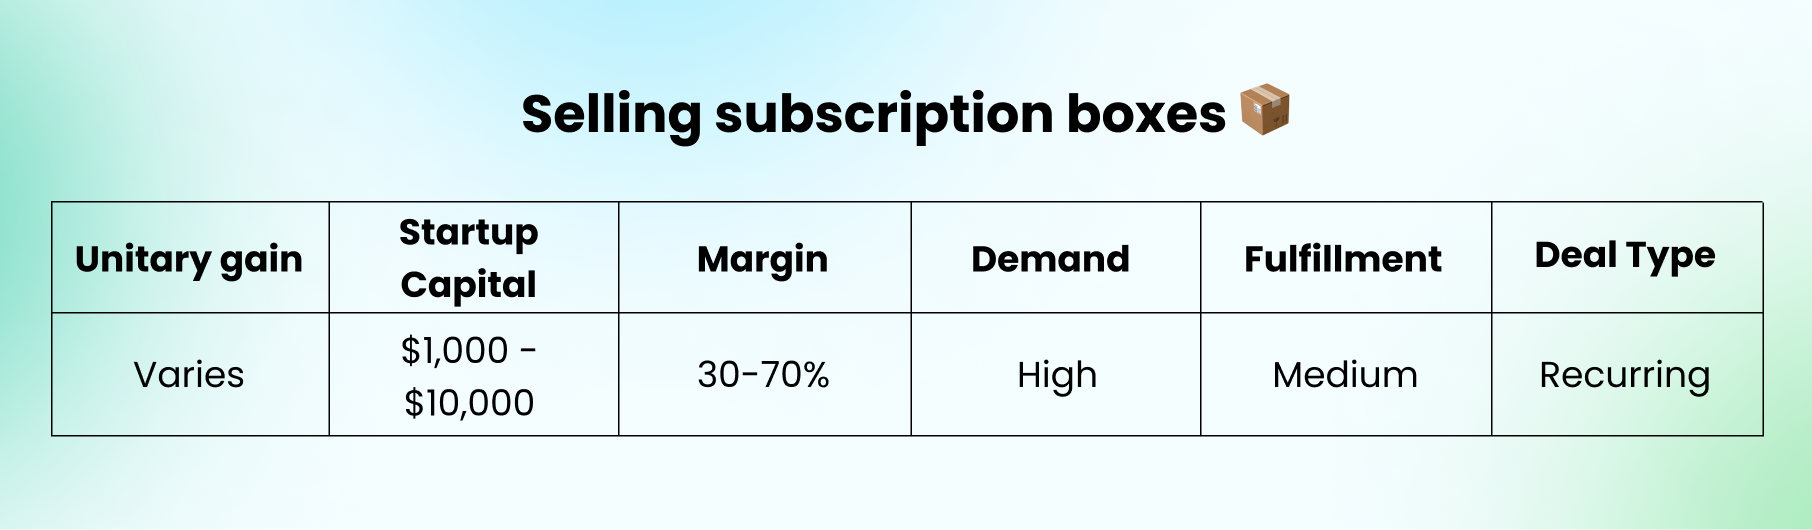 Is selling subscription box a good side hustle idea?